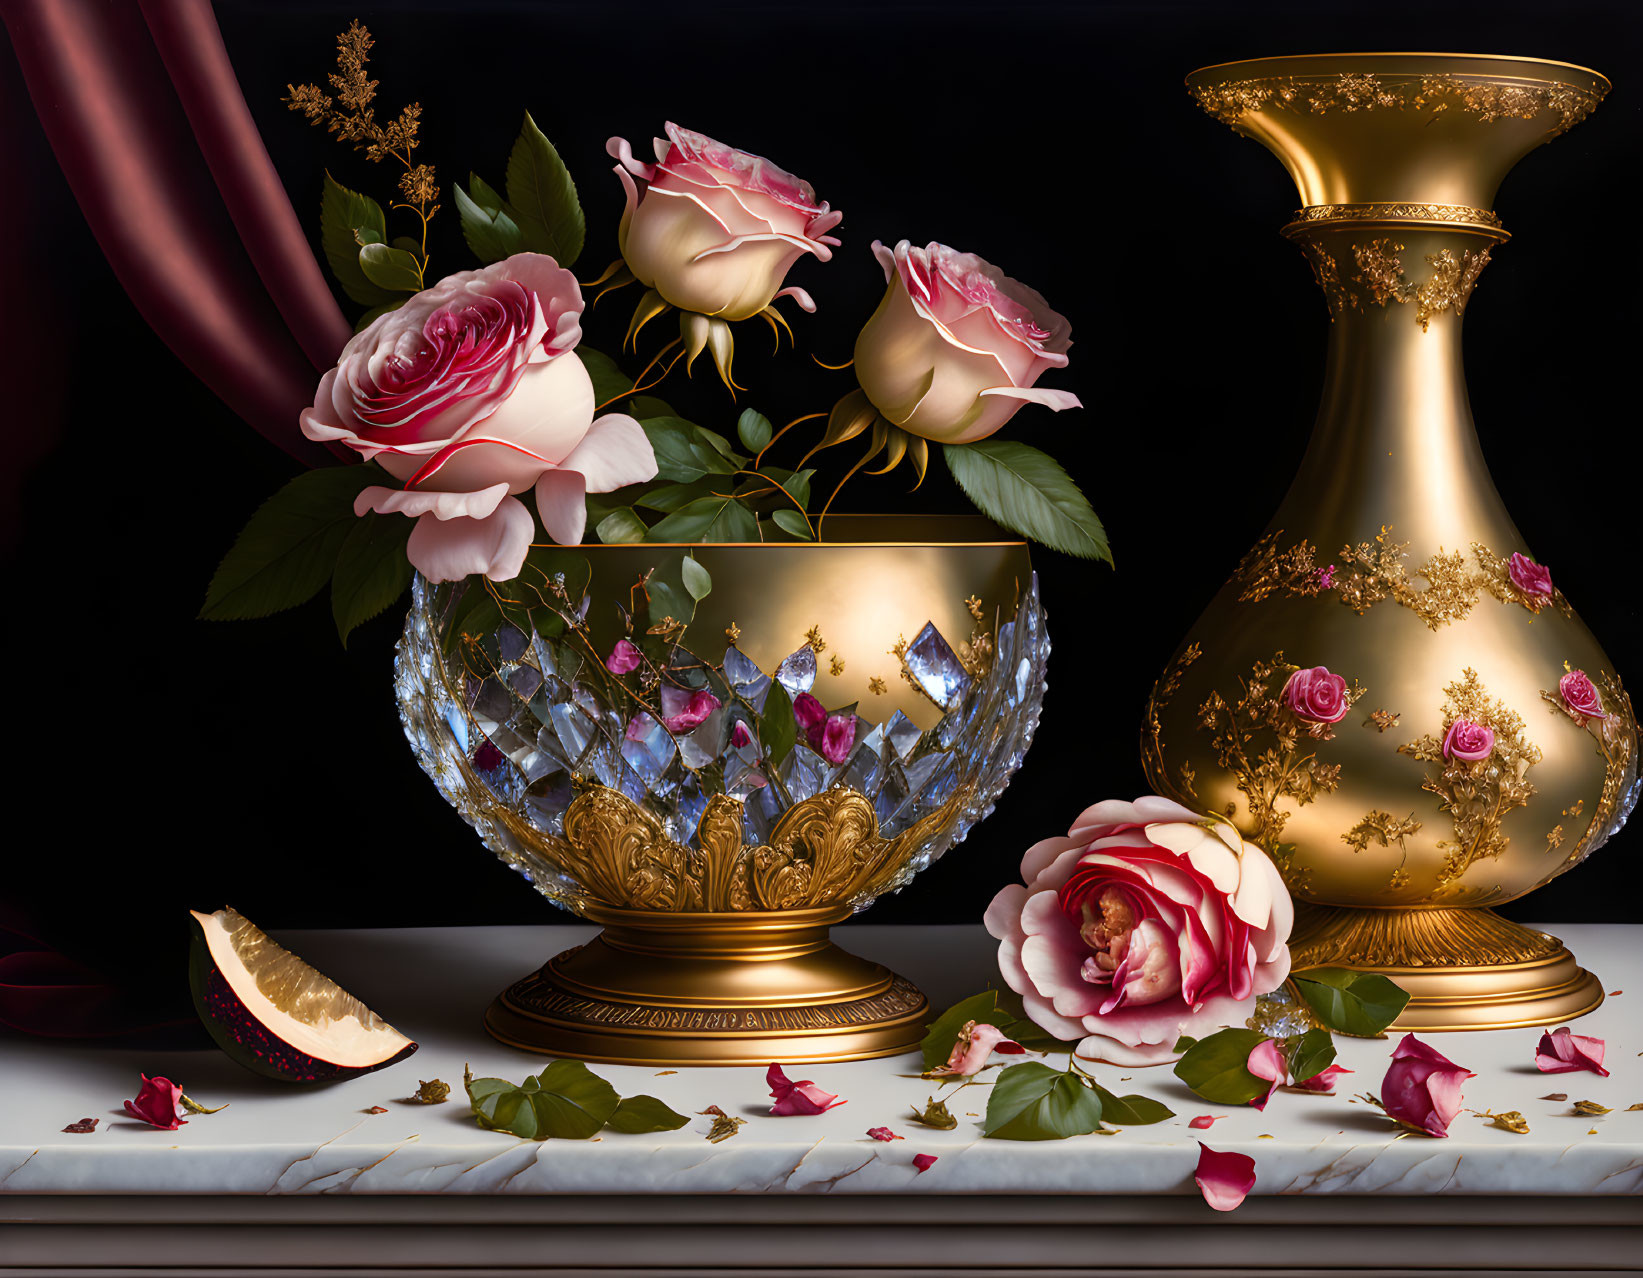 Pink roses in crystal bowl, gold vase, draped curtain, scattered petals, fruit slice.